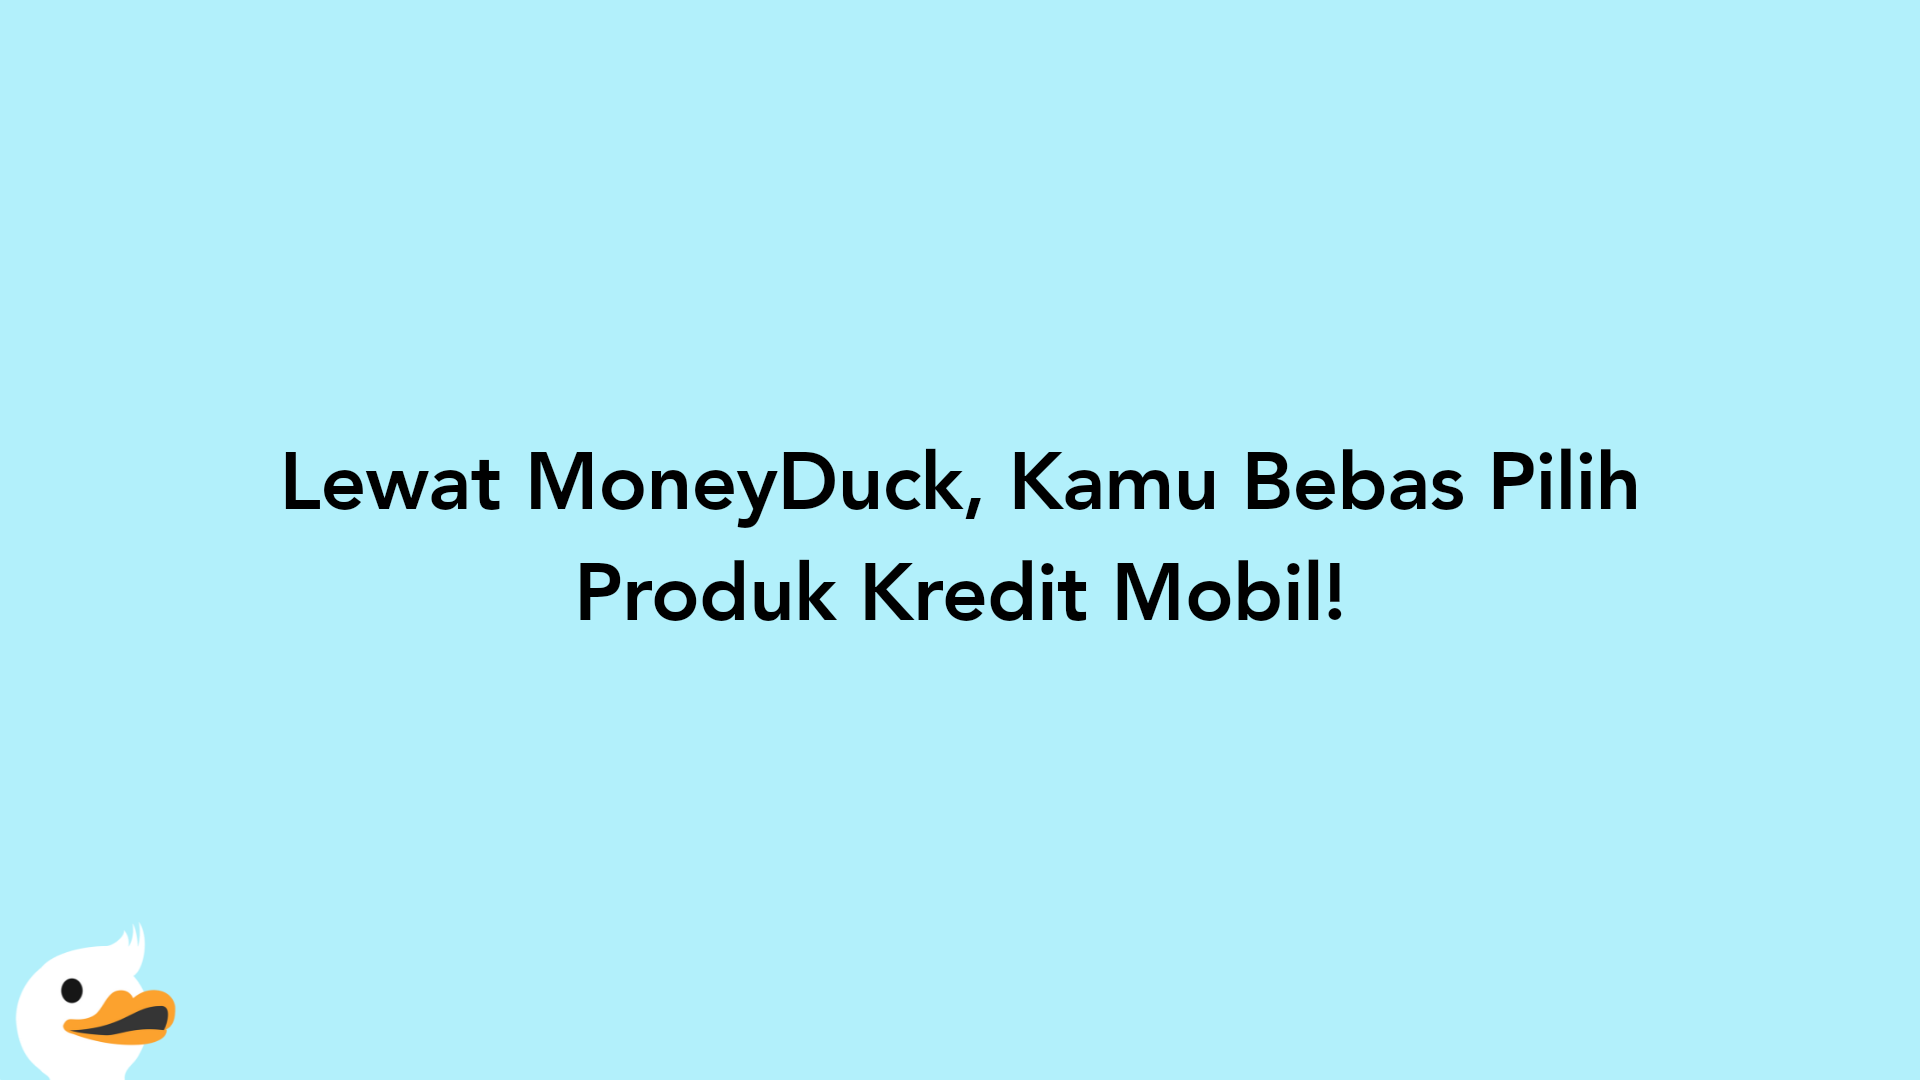 Lewat MoneyDuck, Kamu Bebas Pilih Produk Kredit Mobil!